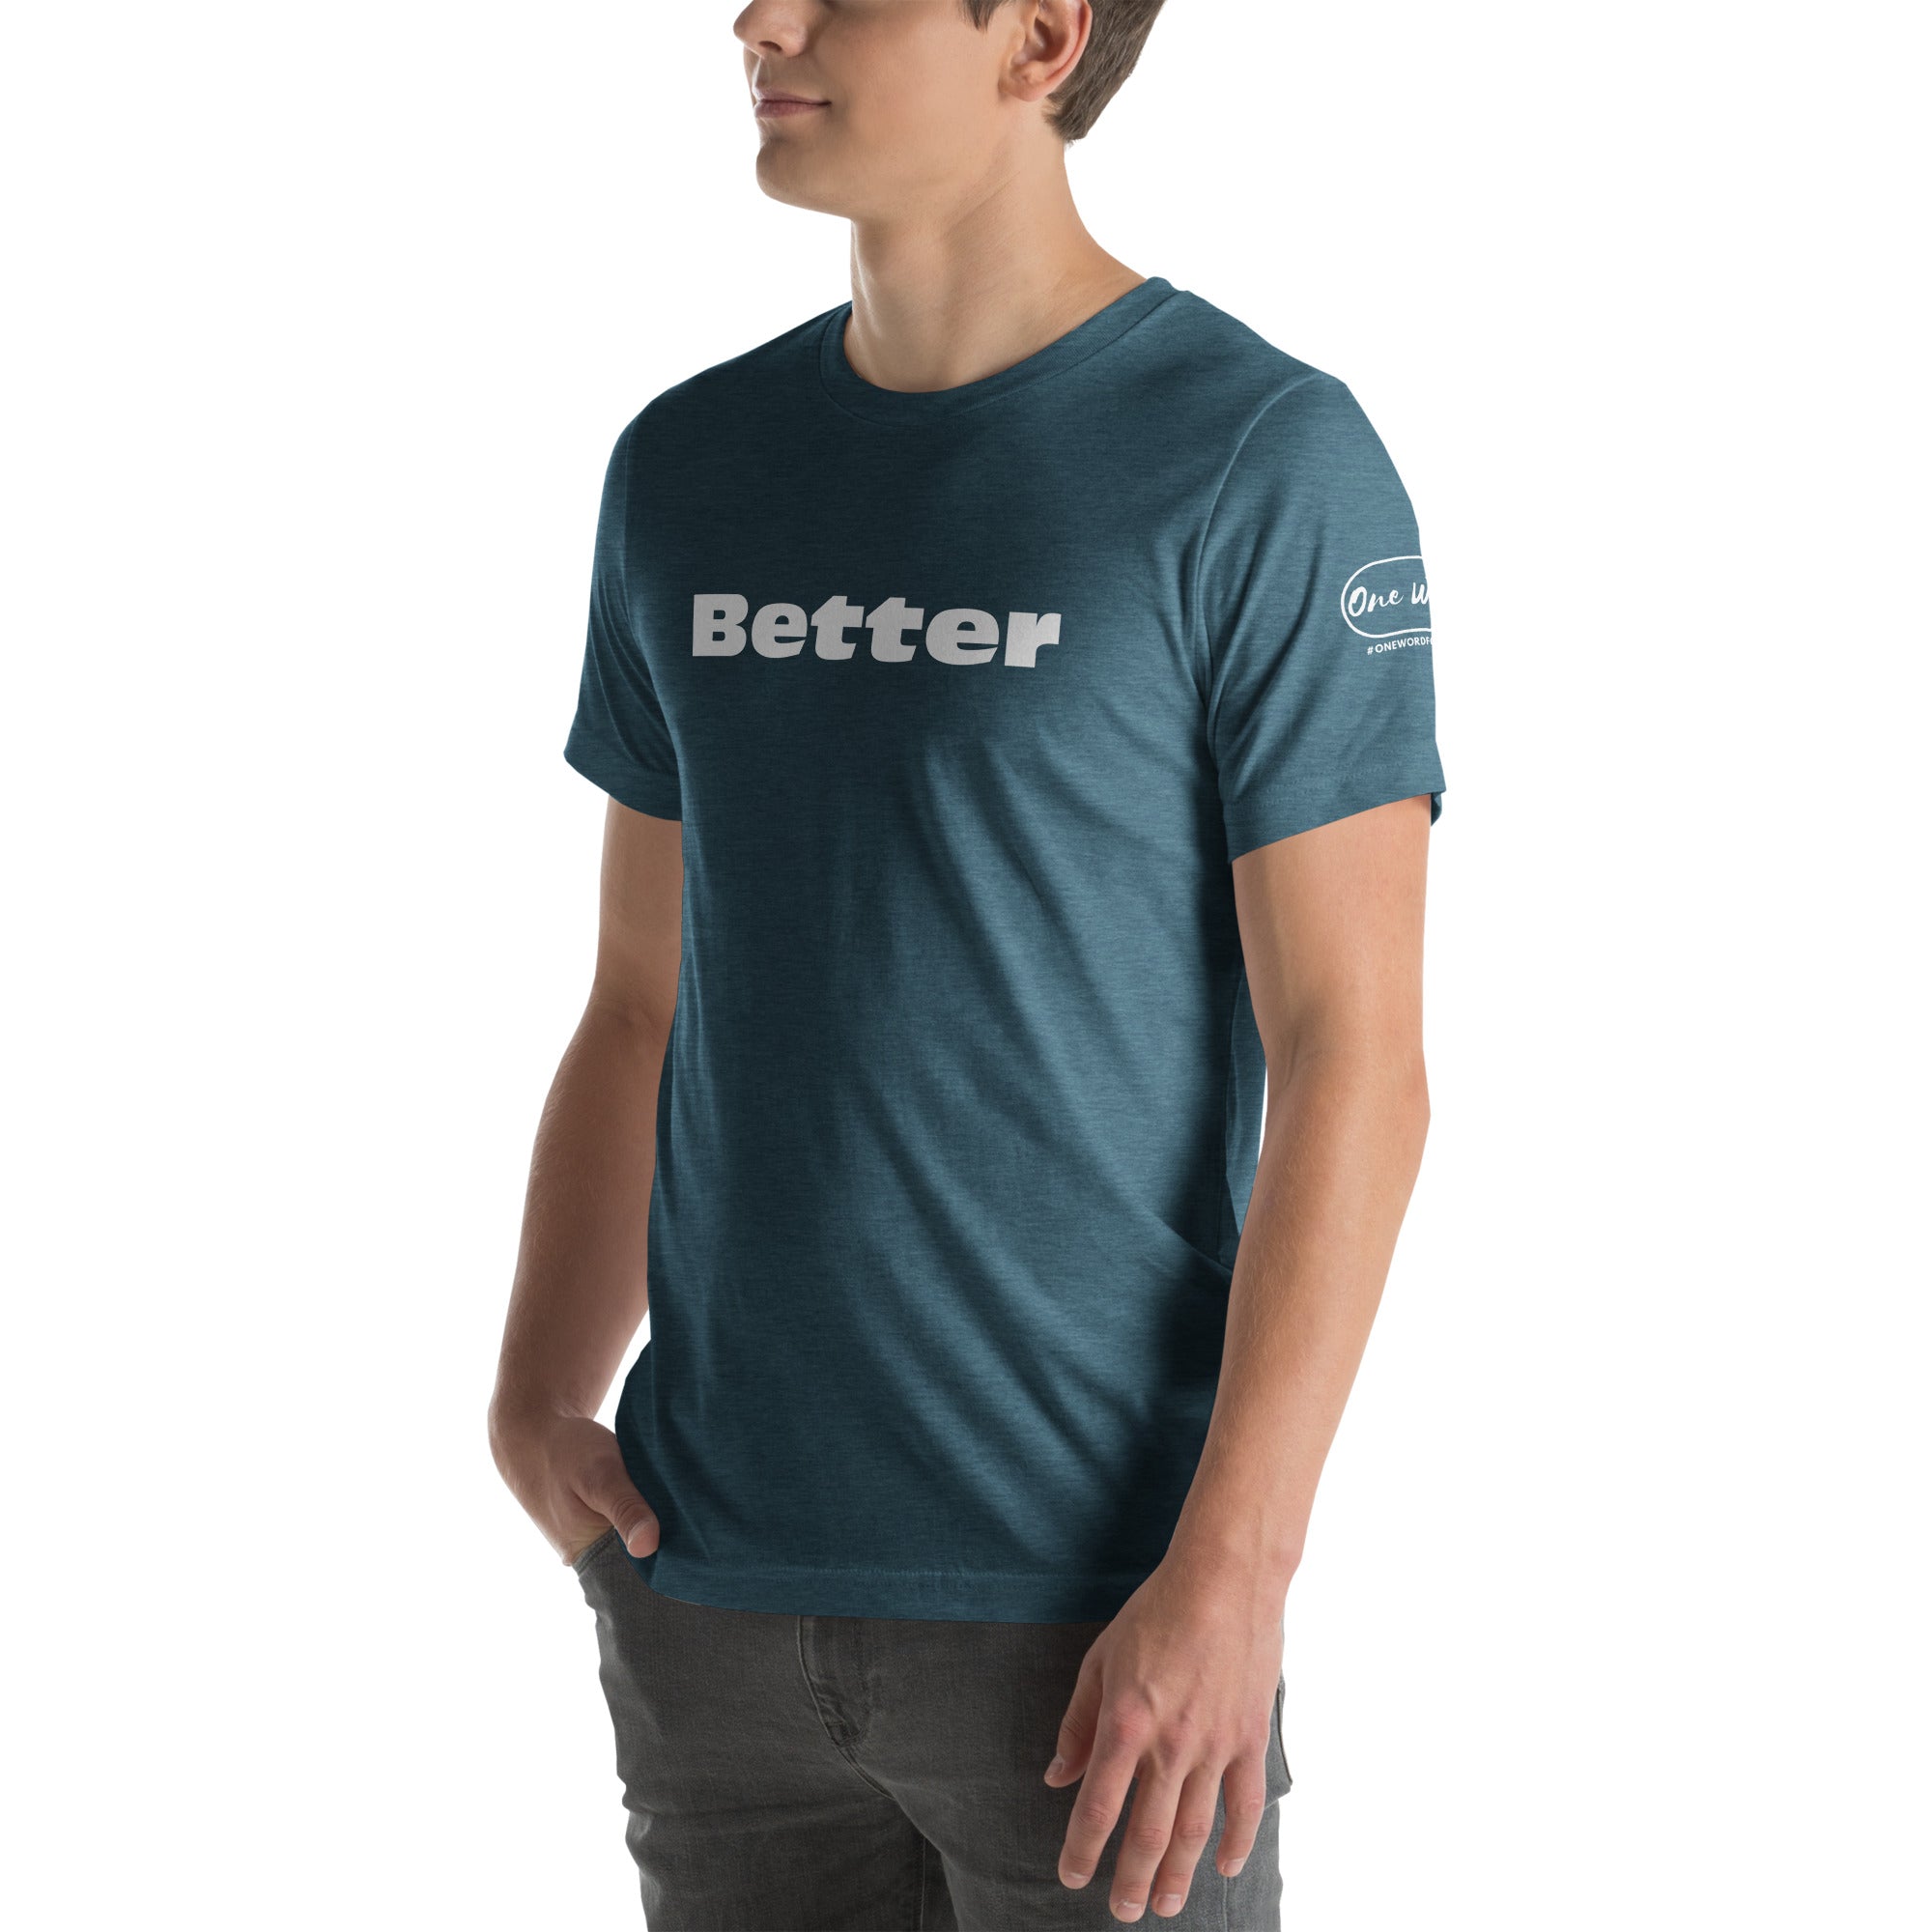 Better-Inspired T-shirt | Faith Apparel | One-Word Unisex T-shirt